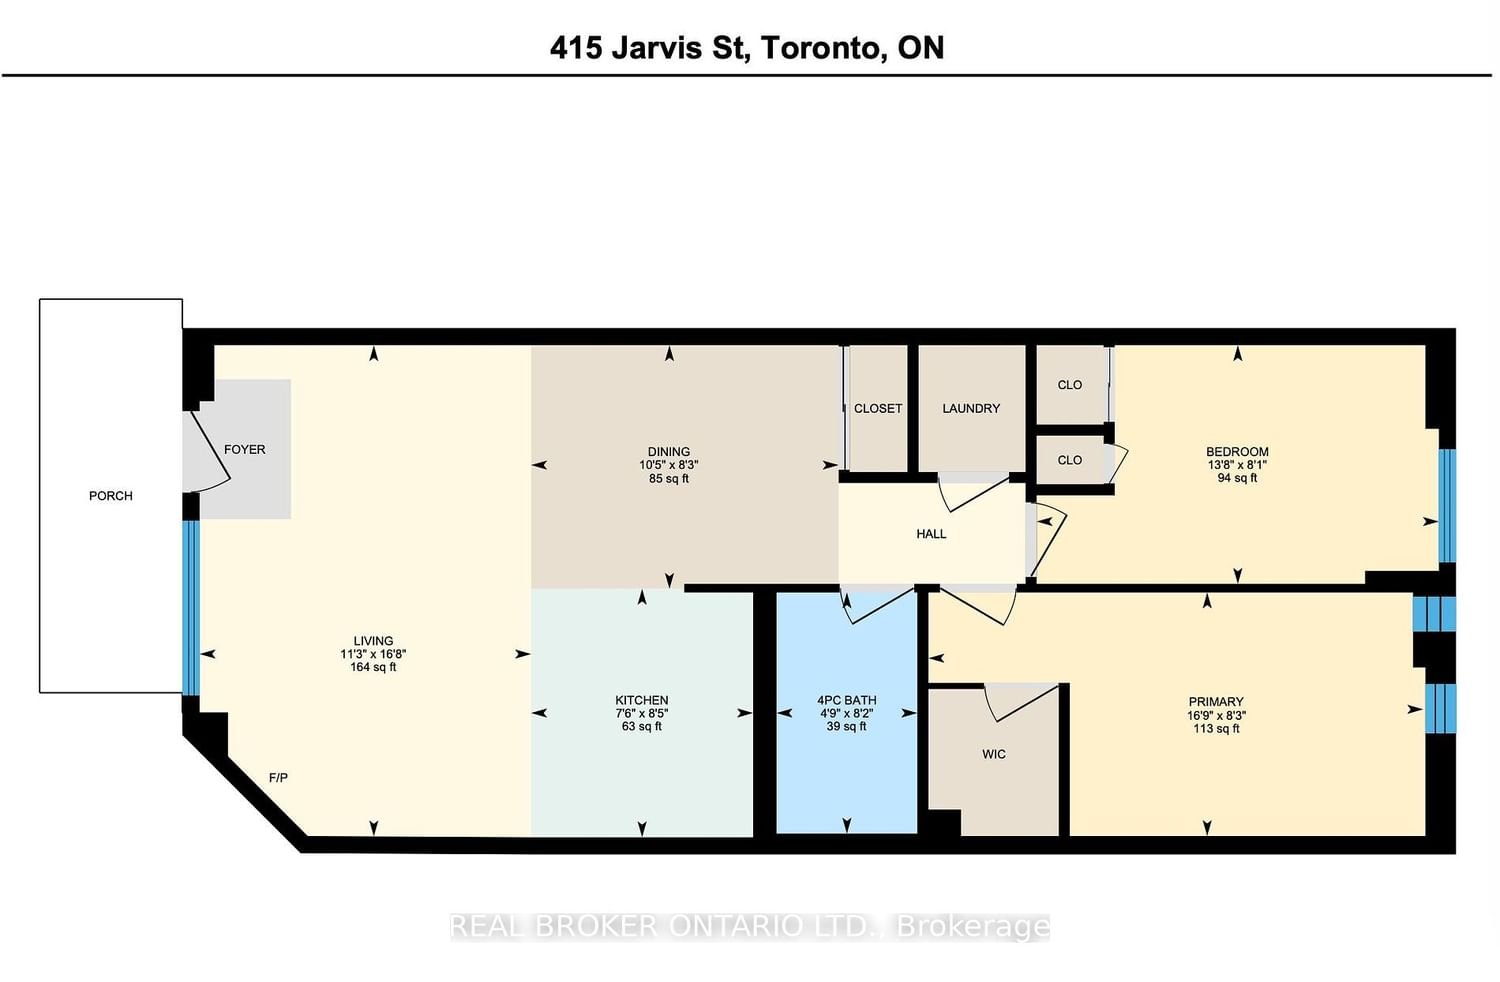 415 Jarvis St, unit 108 for sale - image #26